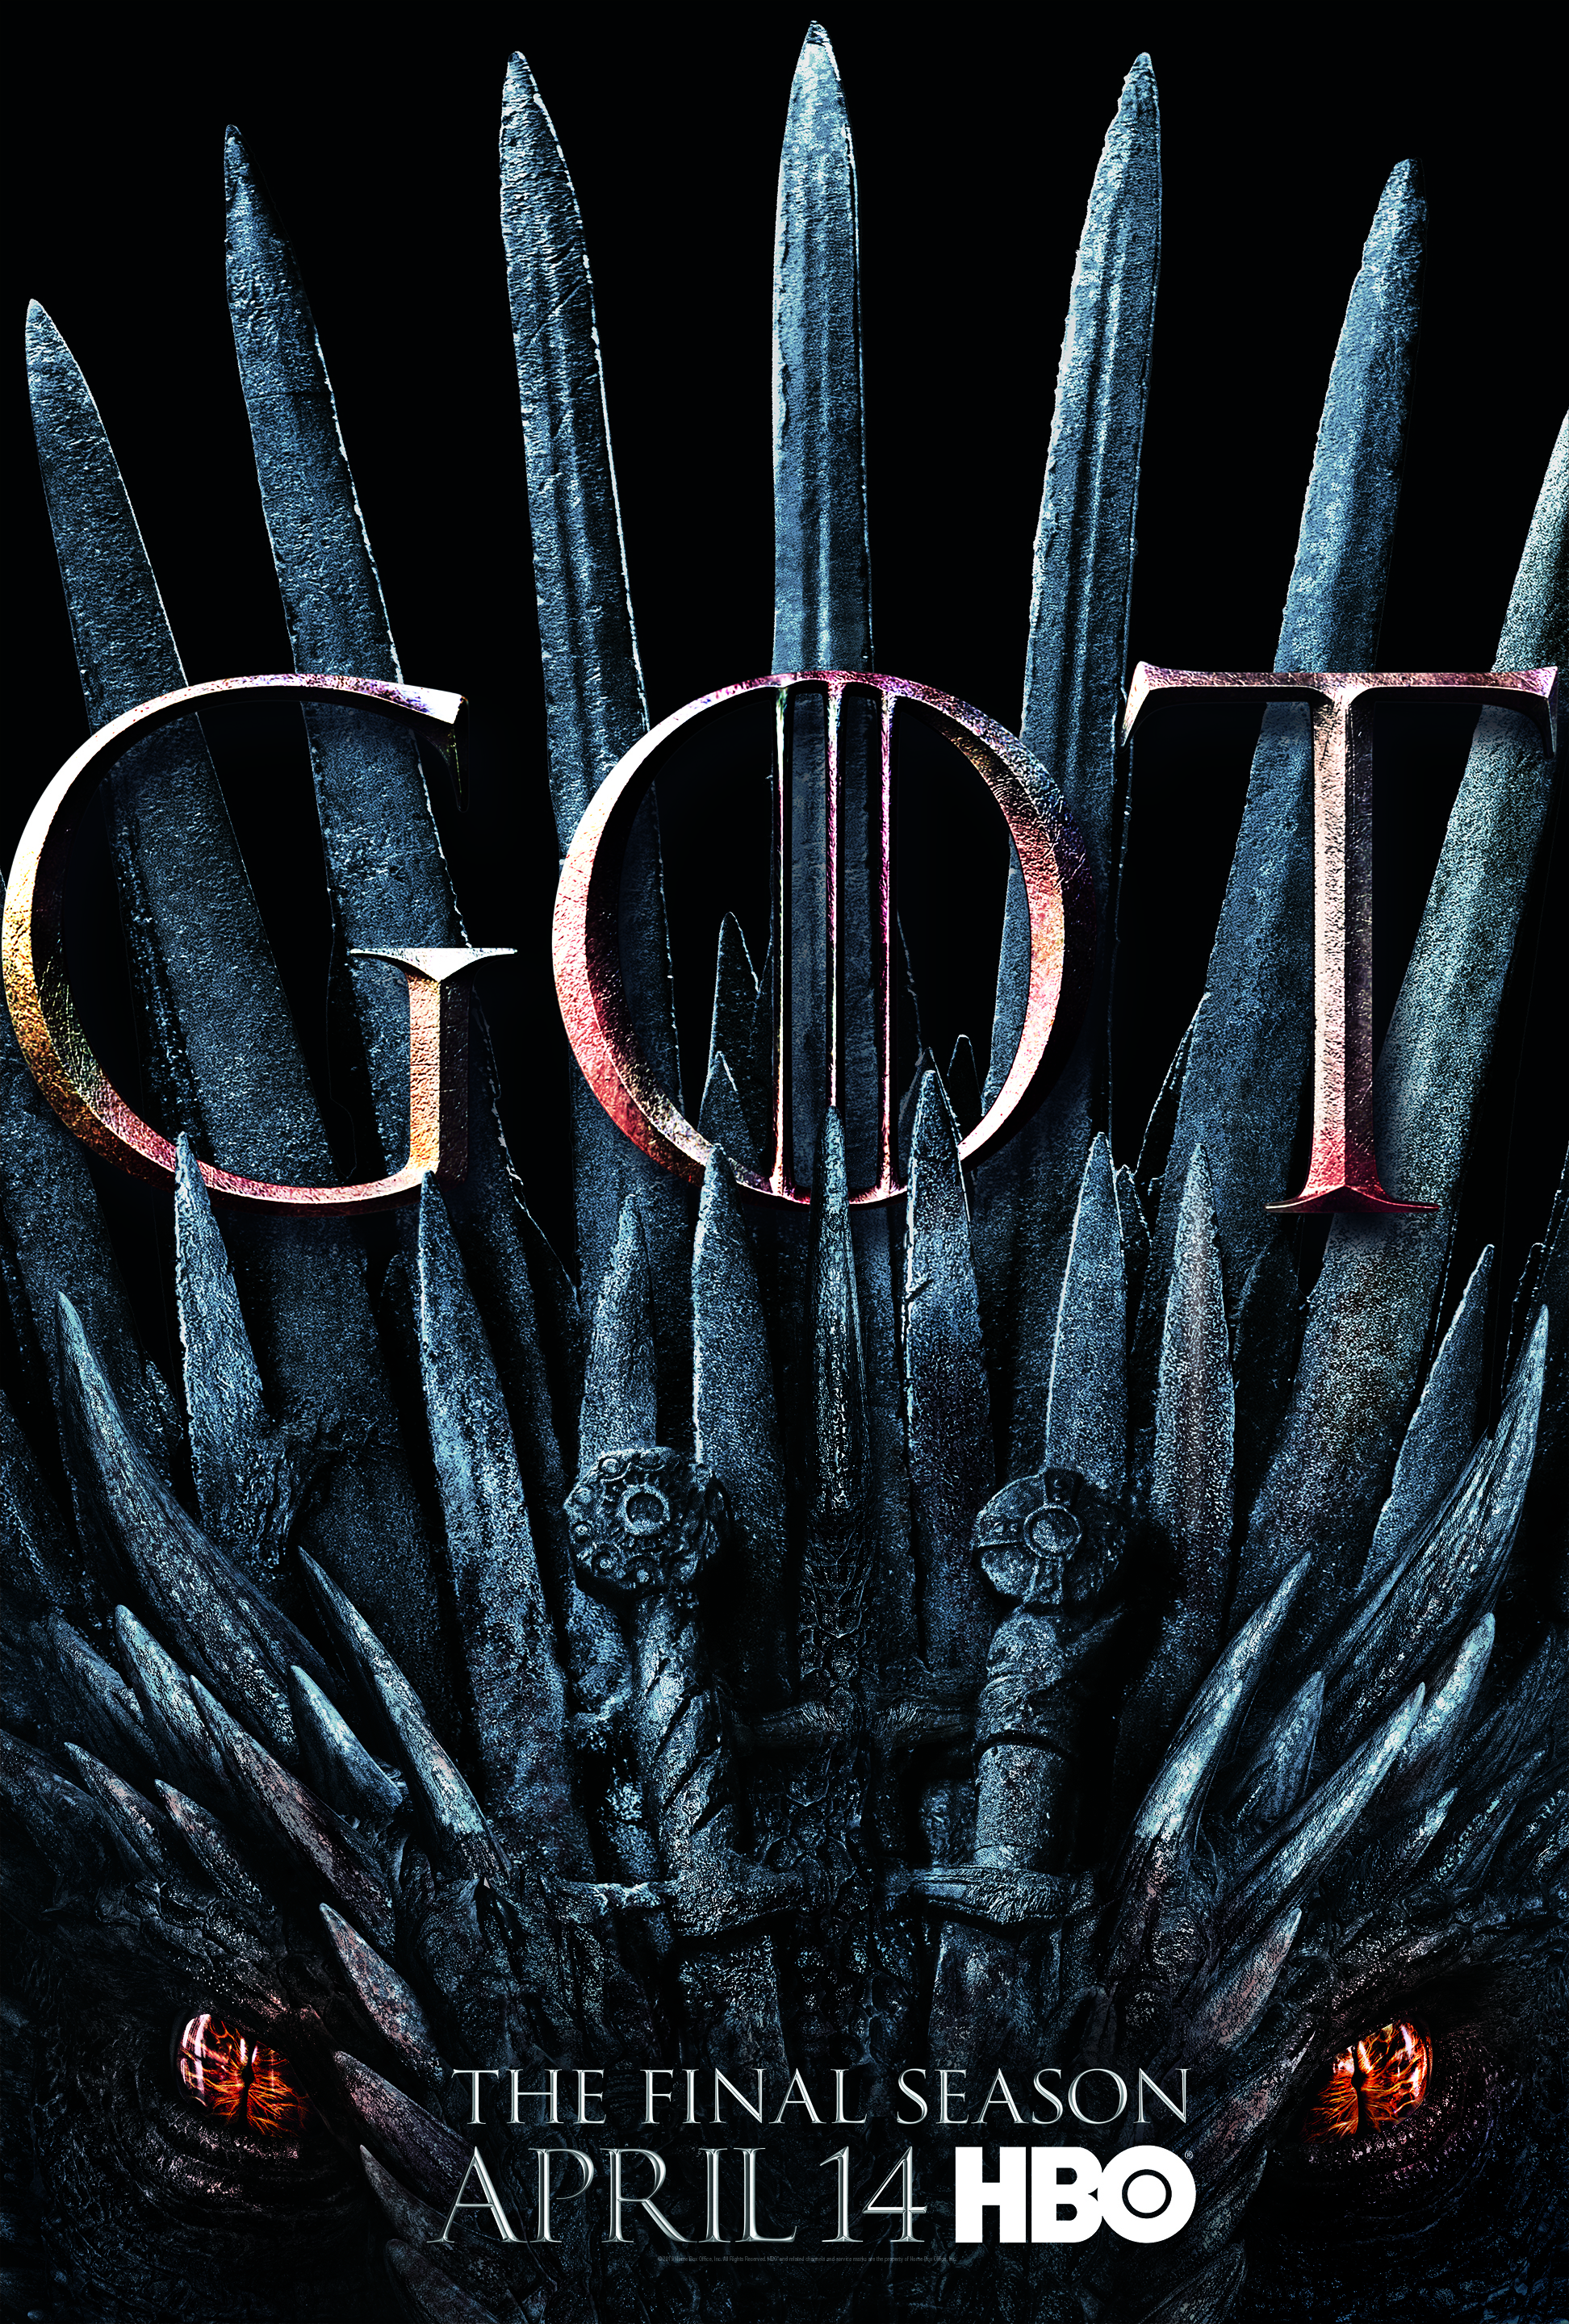 Game of Thrones season 8 poster shows a dragon eyeing the iron throne (Game of Thrones season 8 poster)